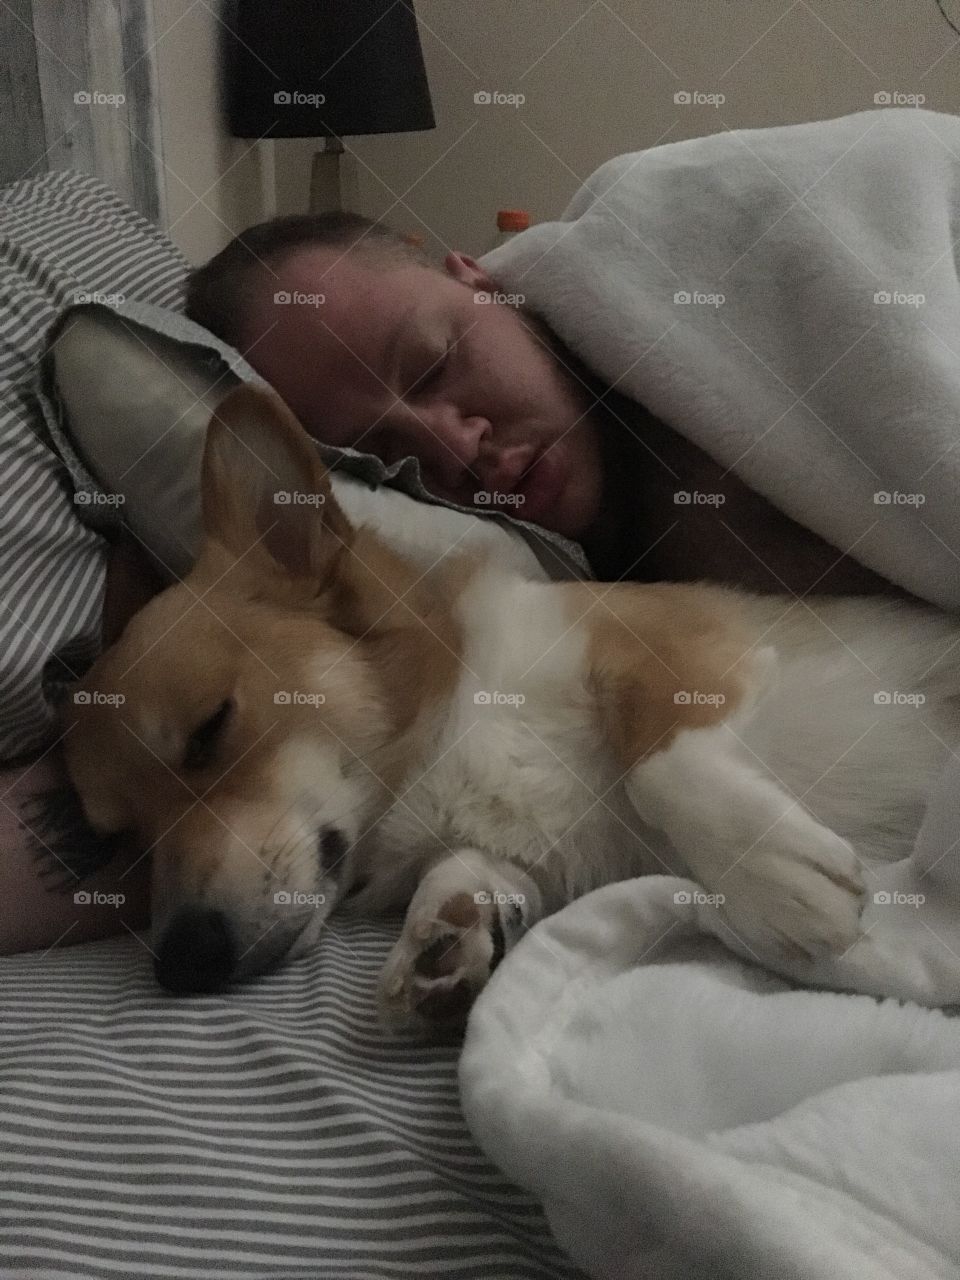 Sleeping sleepy corgi and dog Dad man bed pillow blanket funny cute adorable